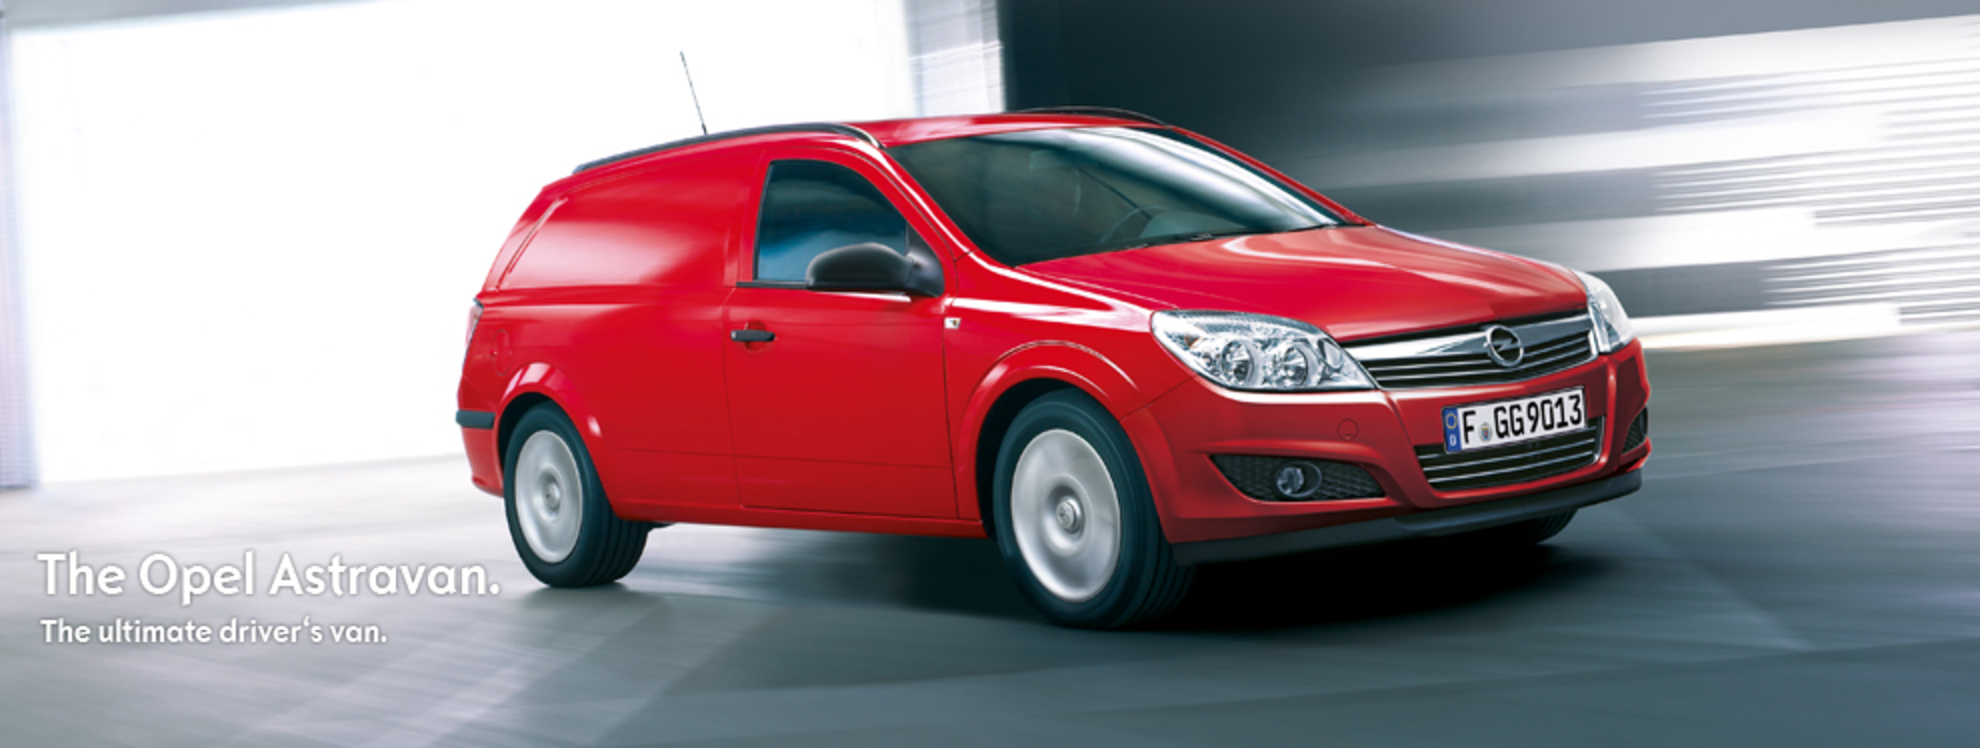 Opel Astra Van. View Download Wallpaper. 990x374. Comments